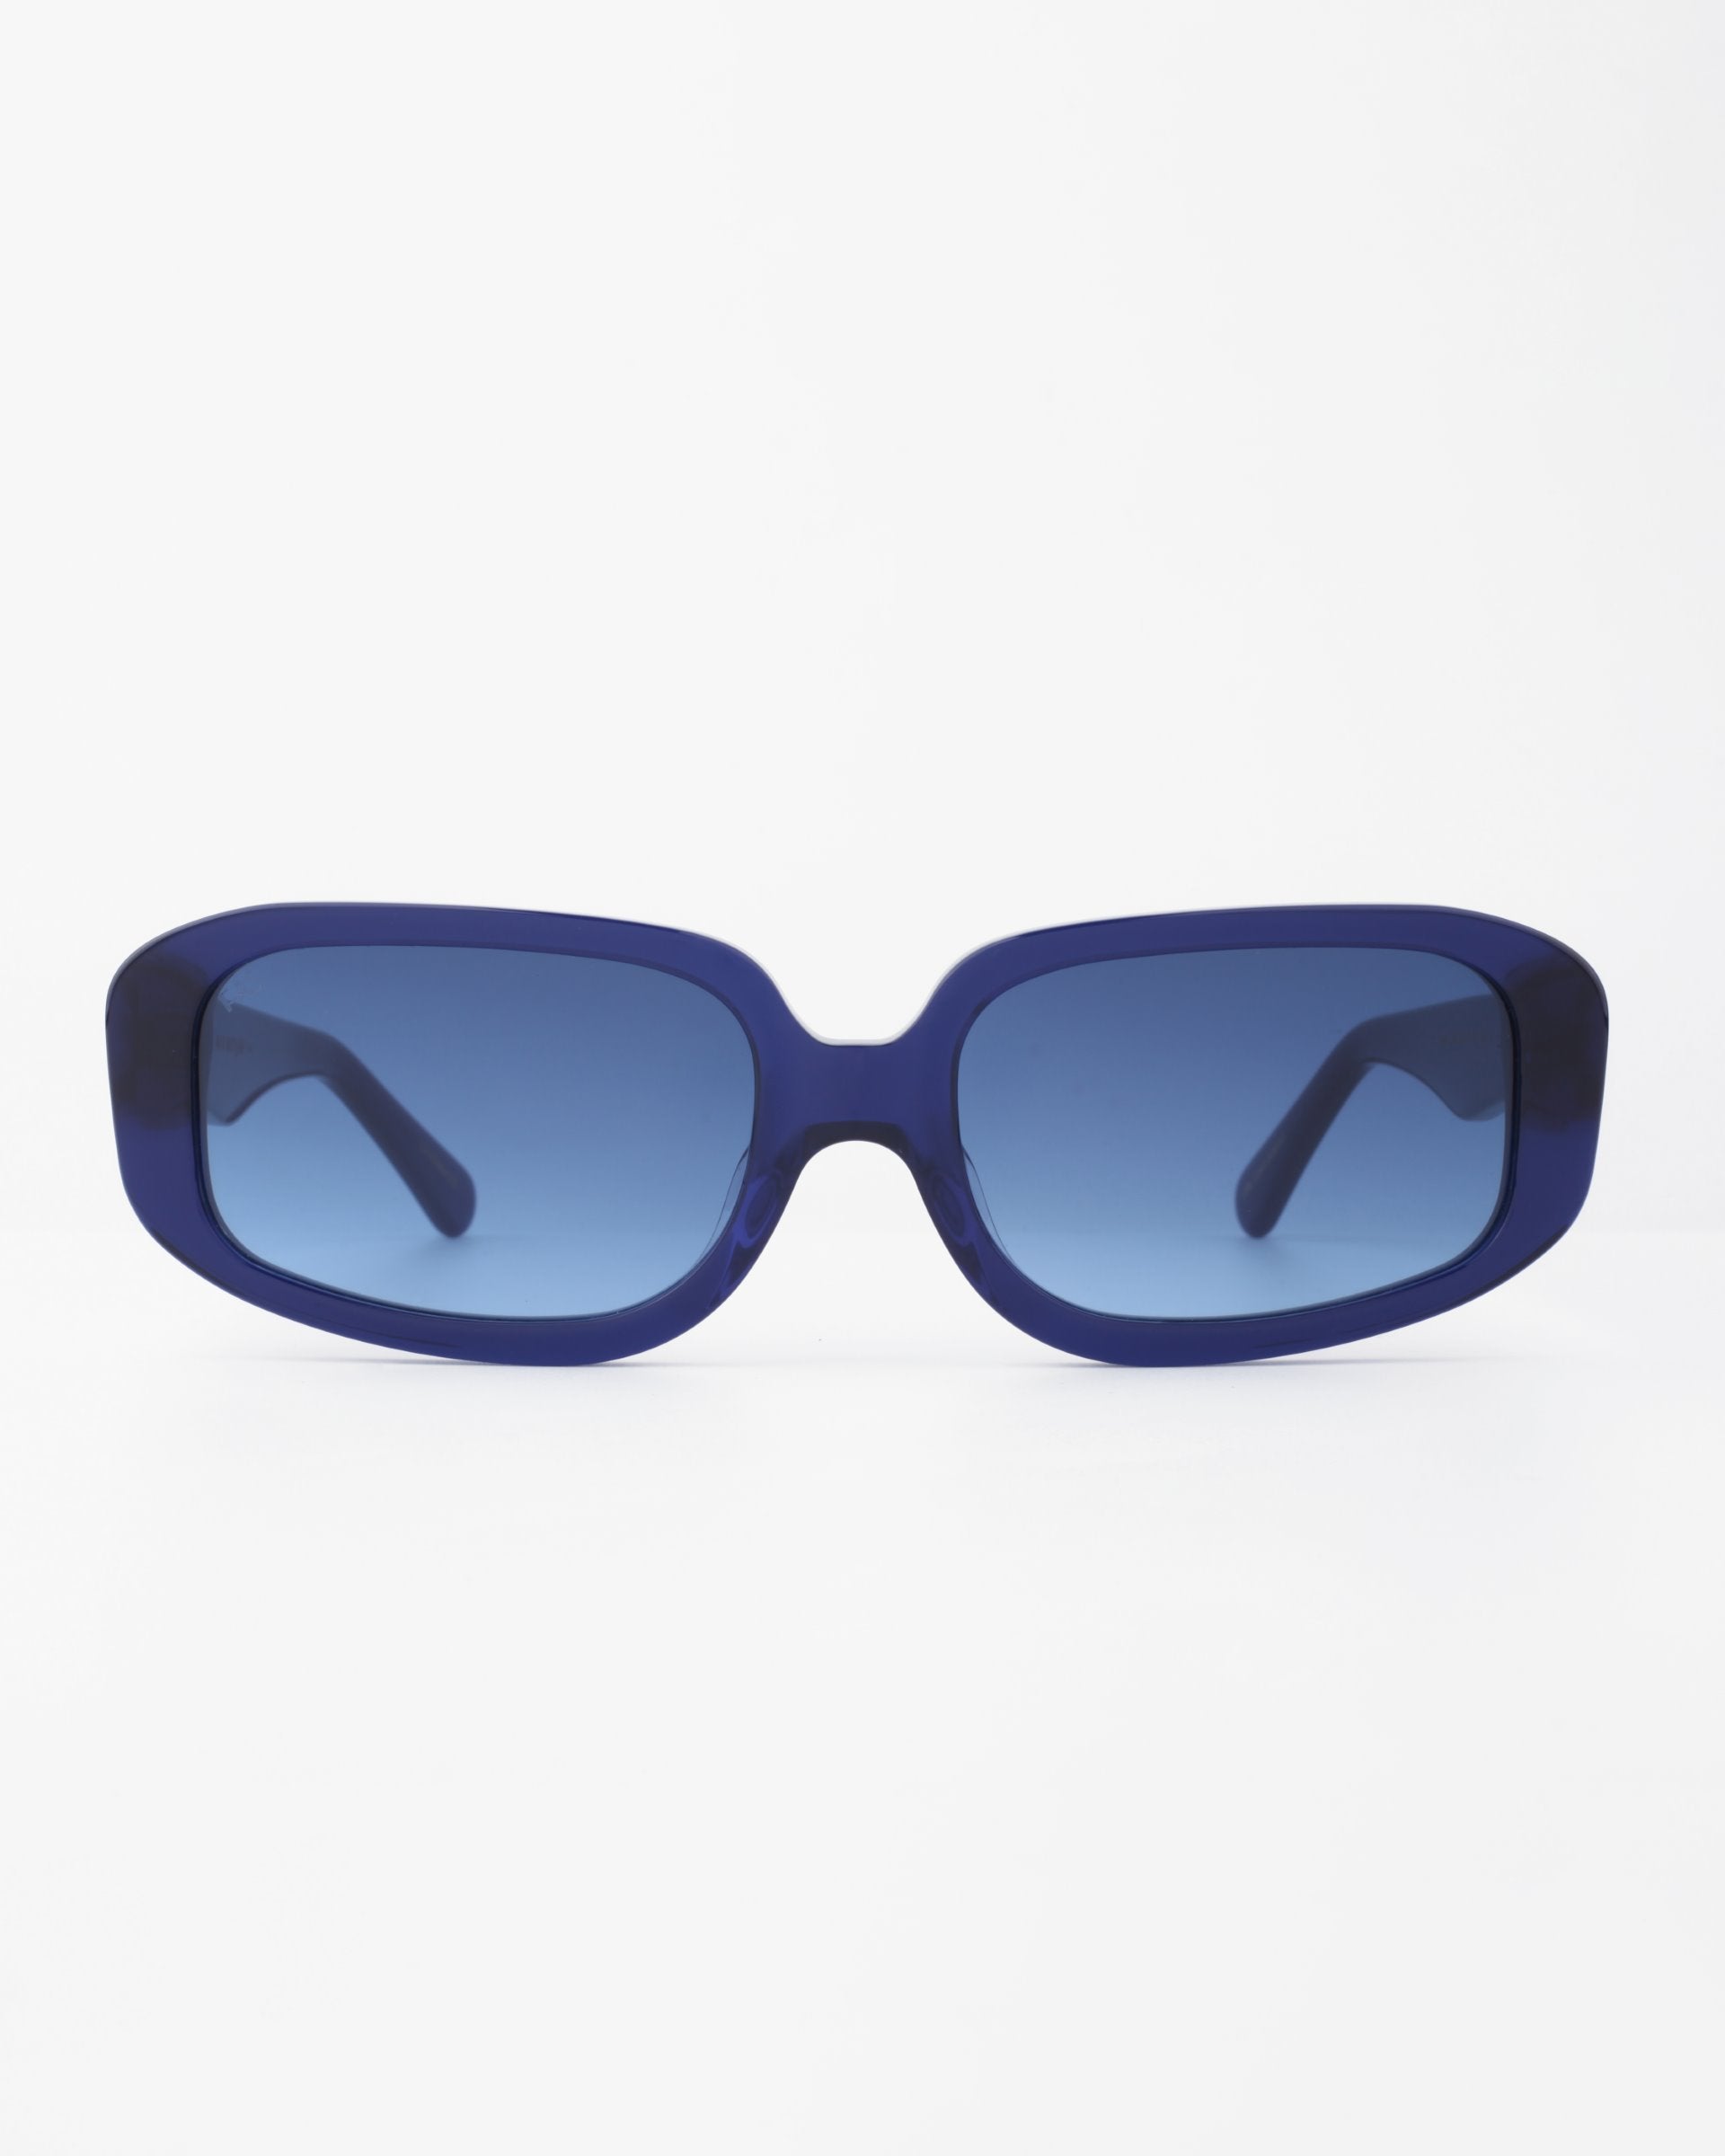 A pair of For Art's Sake® Bolt rectangular sunglasses with dark blue handmade acetate frames and blue-tinted, shatter-resistant nylon lenses, displayed against a white background.